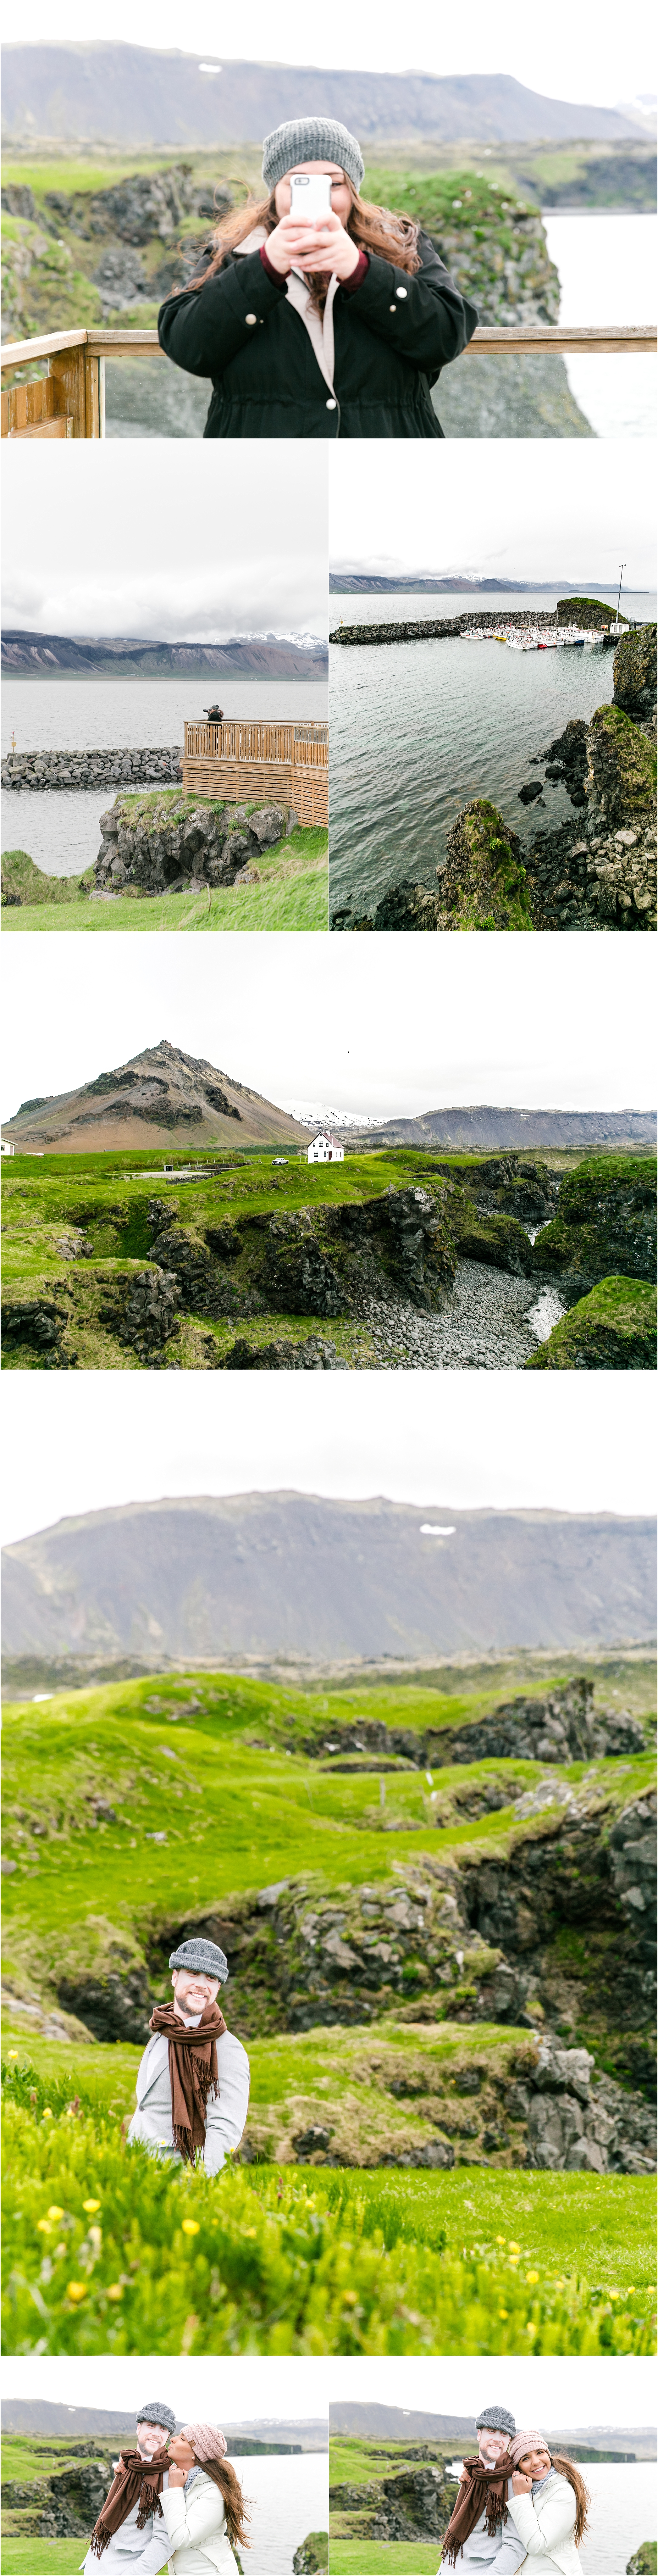 Iceland Ring Road Travels Reykjavik churches waterfalls